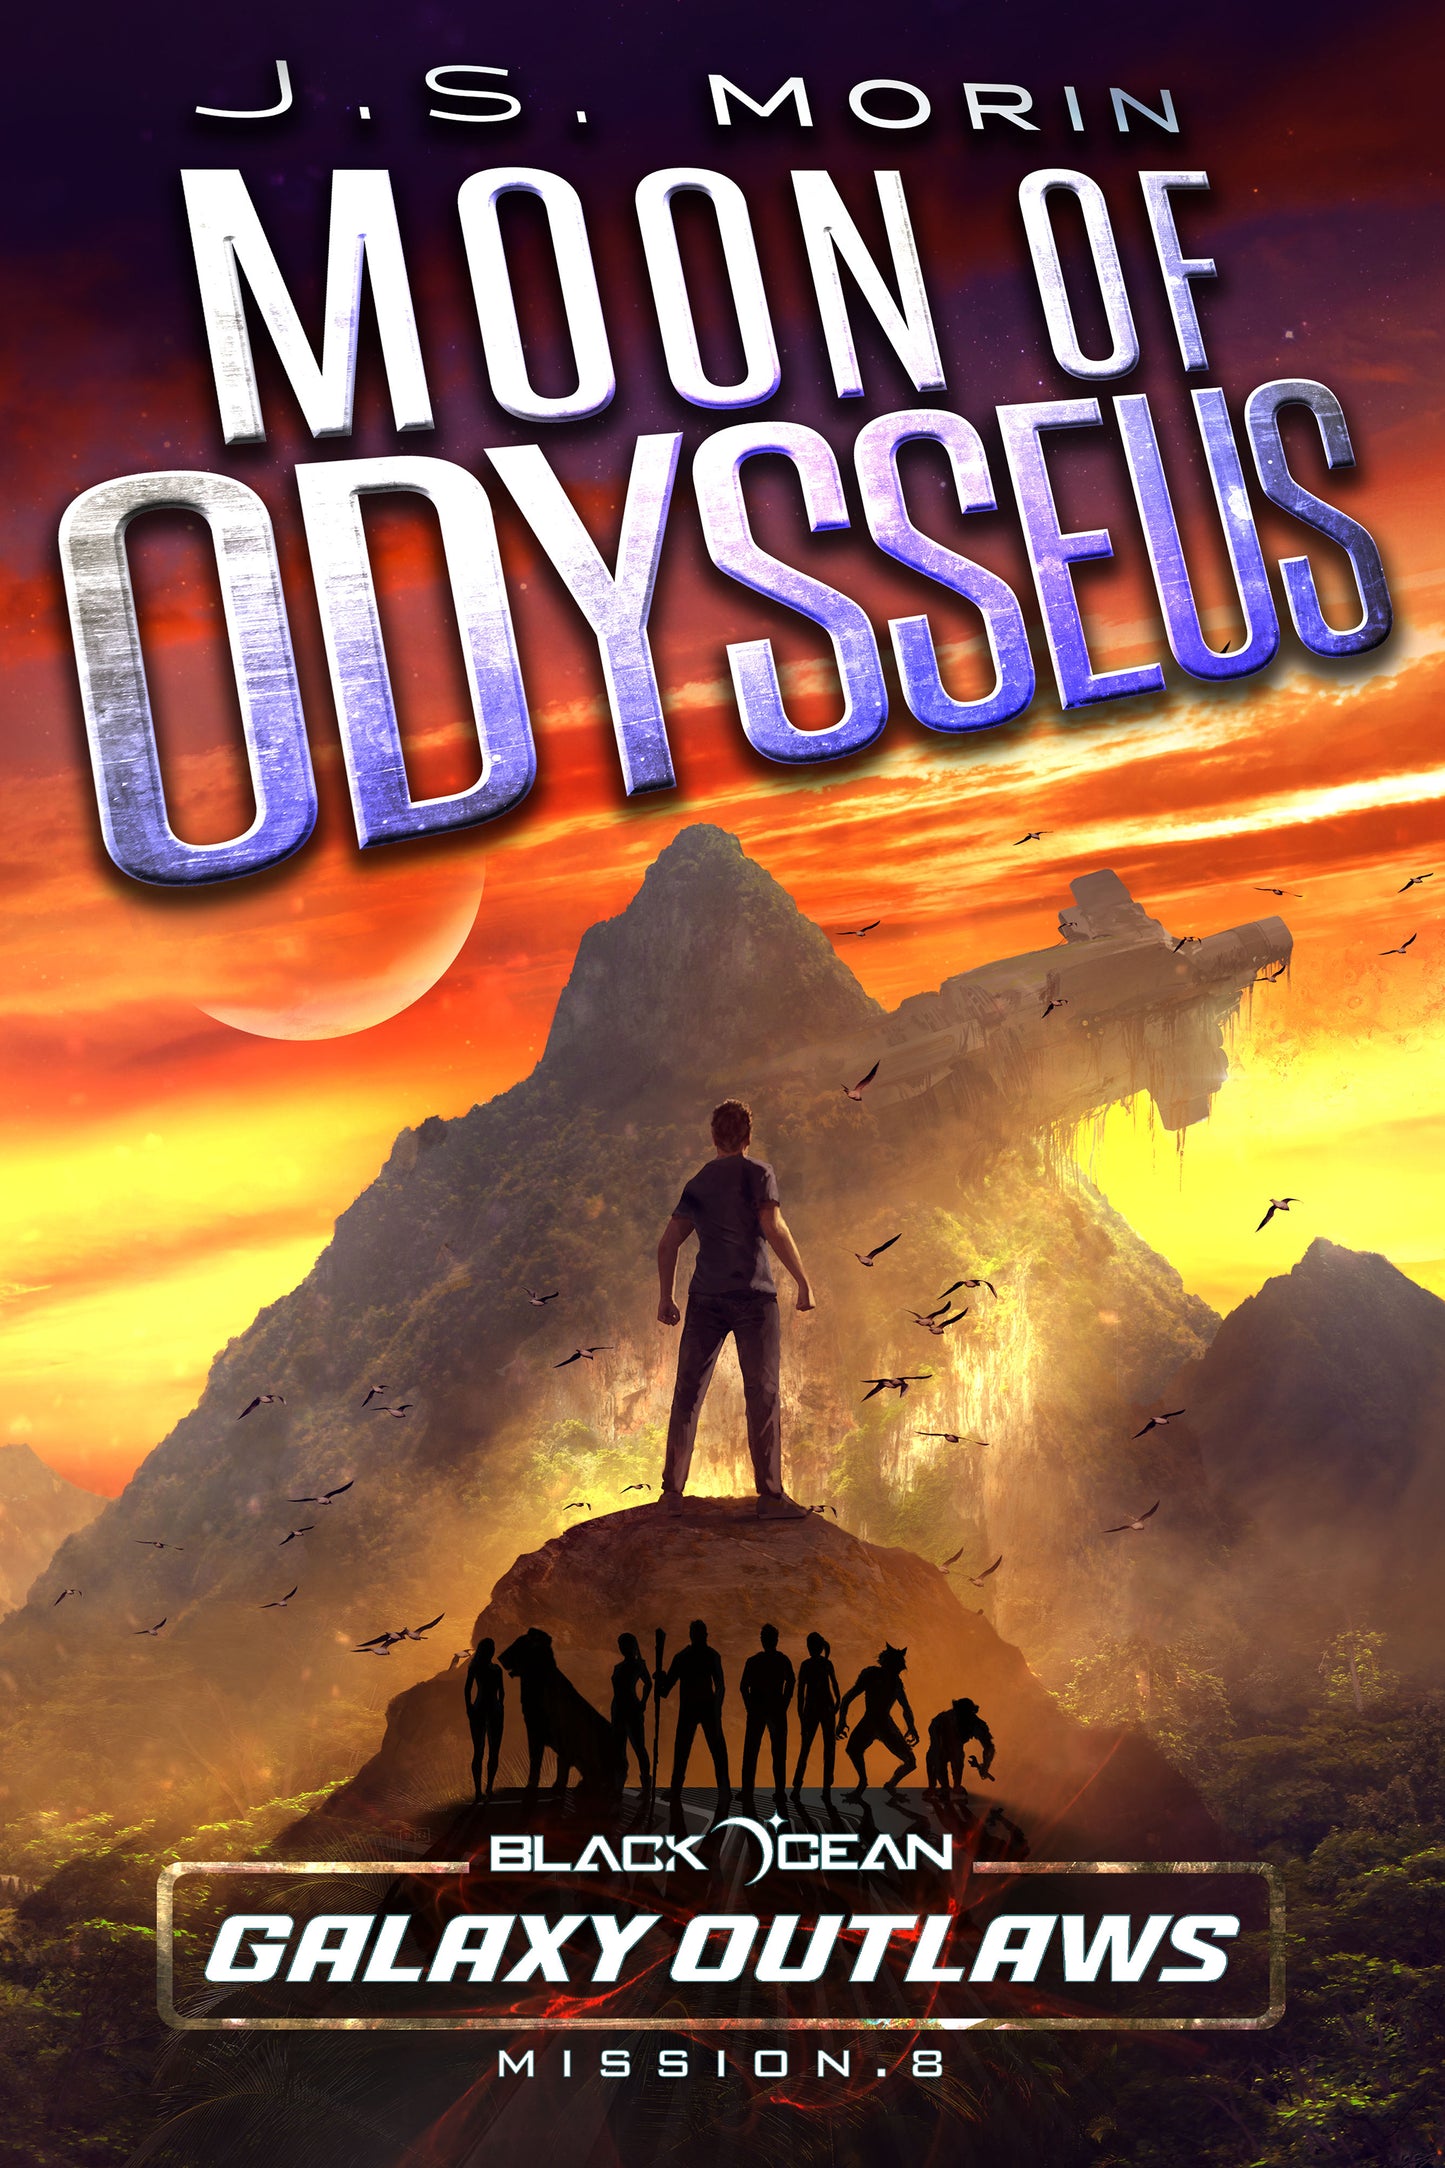 Moon of Odysseus, Black Ocean: Galaxy Outlaws Mission 8